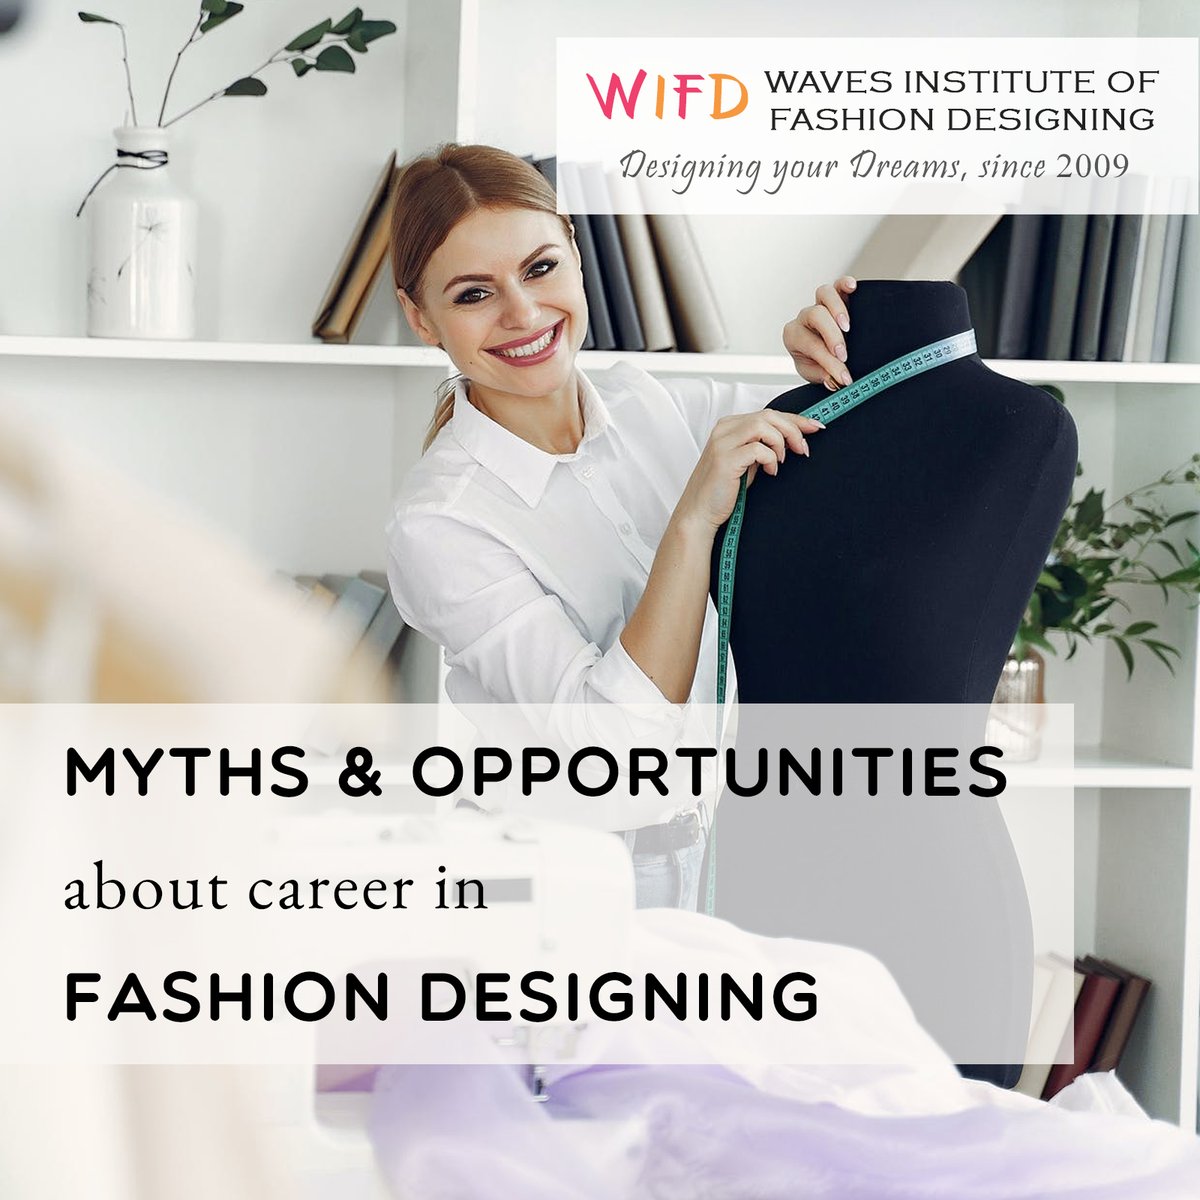 𝐁𝐫𝐞𝐚𝐤𝐢𝐧𝐠 𝐝𝐨𝐰𝐧 𝐅𝐚𝐬𝐡𝐢𝐨𝐧 𝐈𝐧𝐝𝐮𝐬𝐭𝐫𝐲 𝐌𝐲𝐭𝐡𝐬 𝐟𝐨𝐫 𝐚 𝐛𝐫𝐢𝐠𝐡𝐭𝐞𝐫 𝐅𝐮𝐭𝐮𝐫𝐞!

wifd.in/unveiling_the_…

#fashionindustry #fashiondesign #careeropportunities #mythsandtruths #fashioncareers 
#fashionprofessionals #wifd #fashioninstitute #kerala